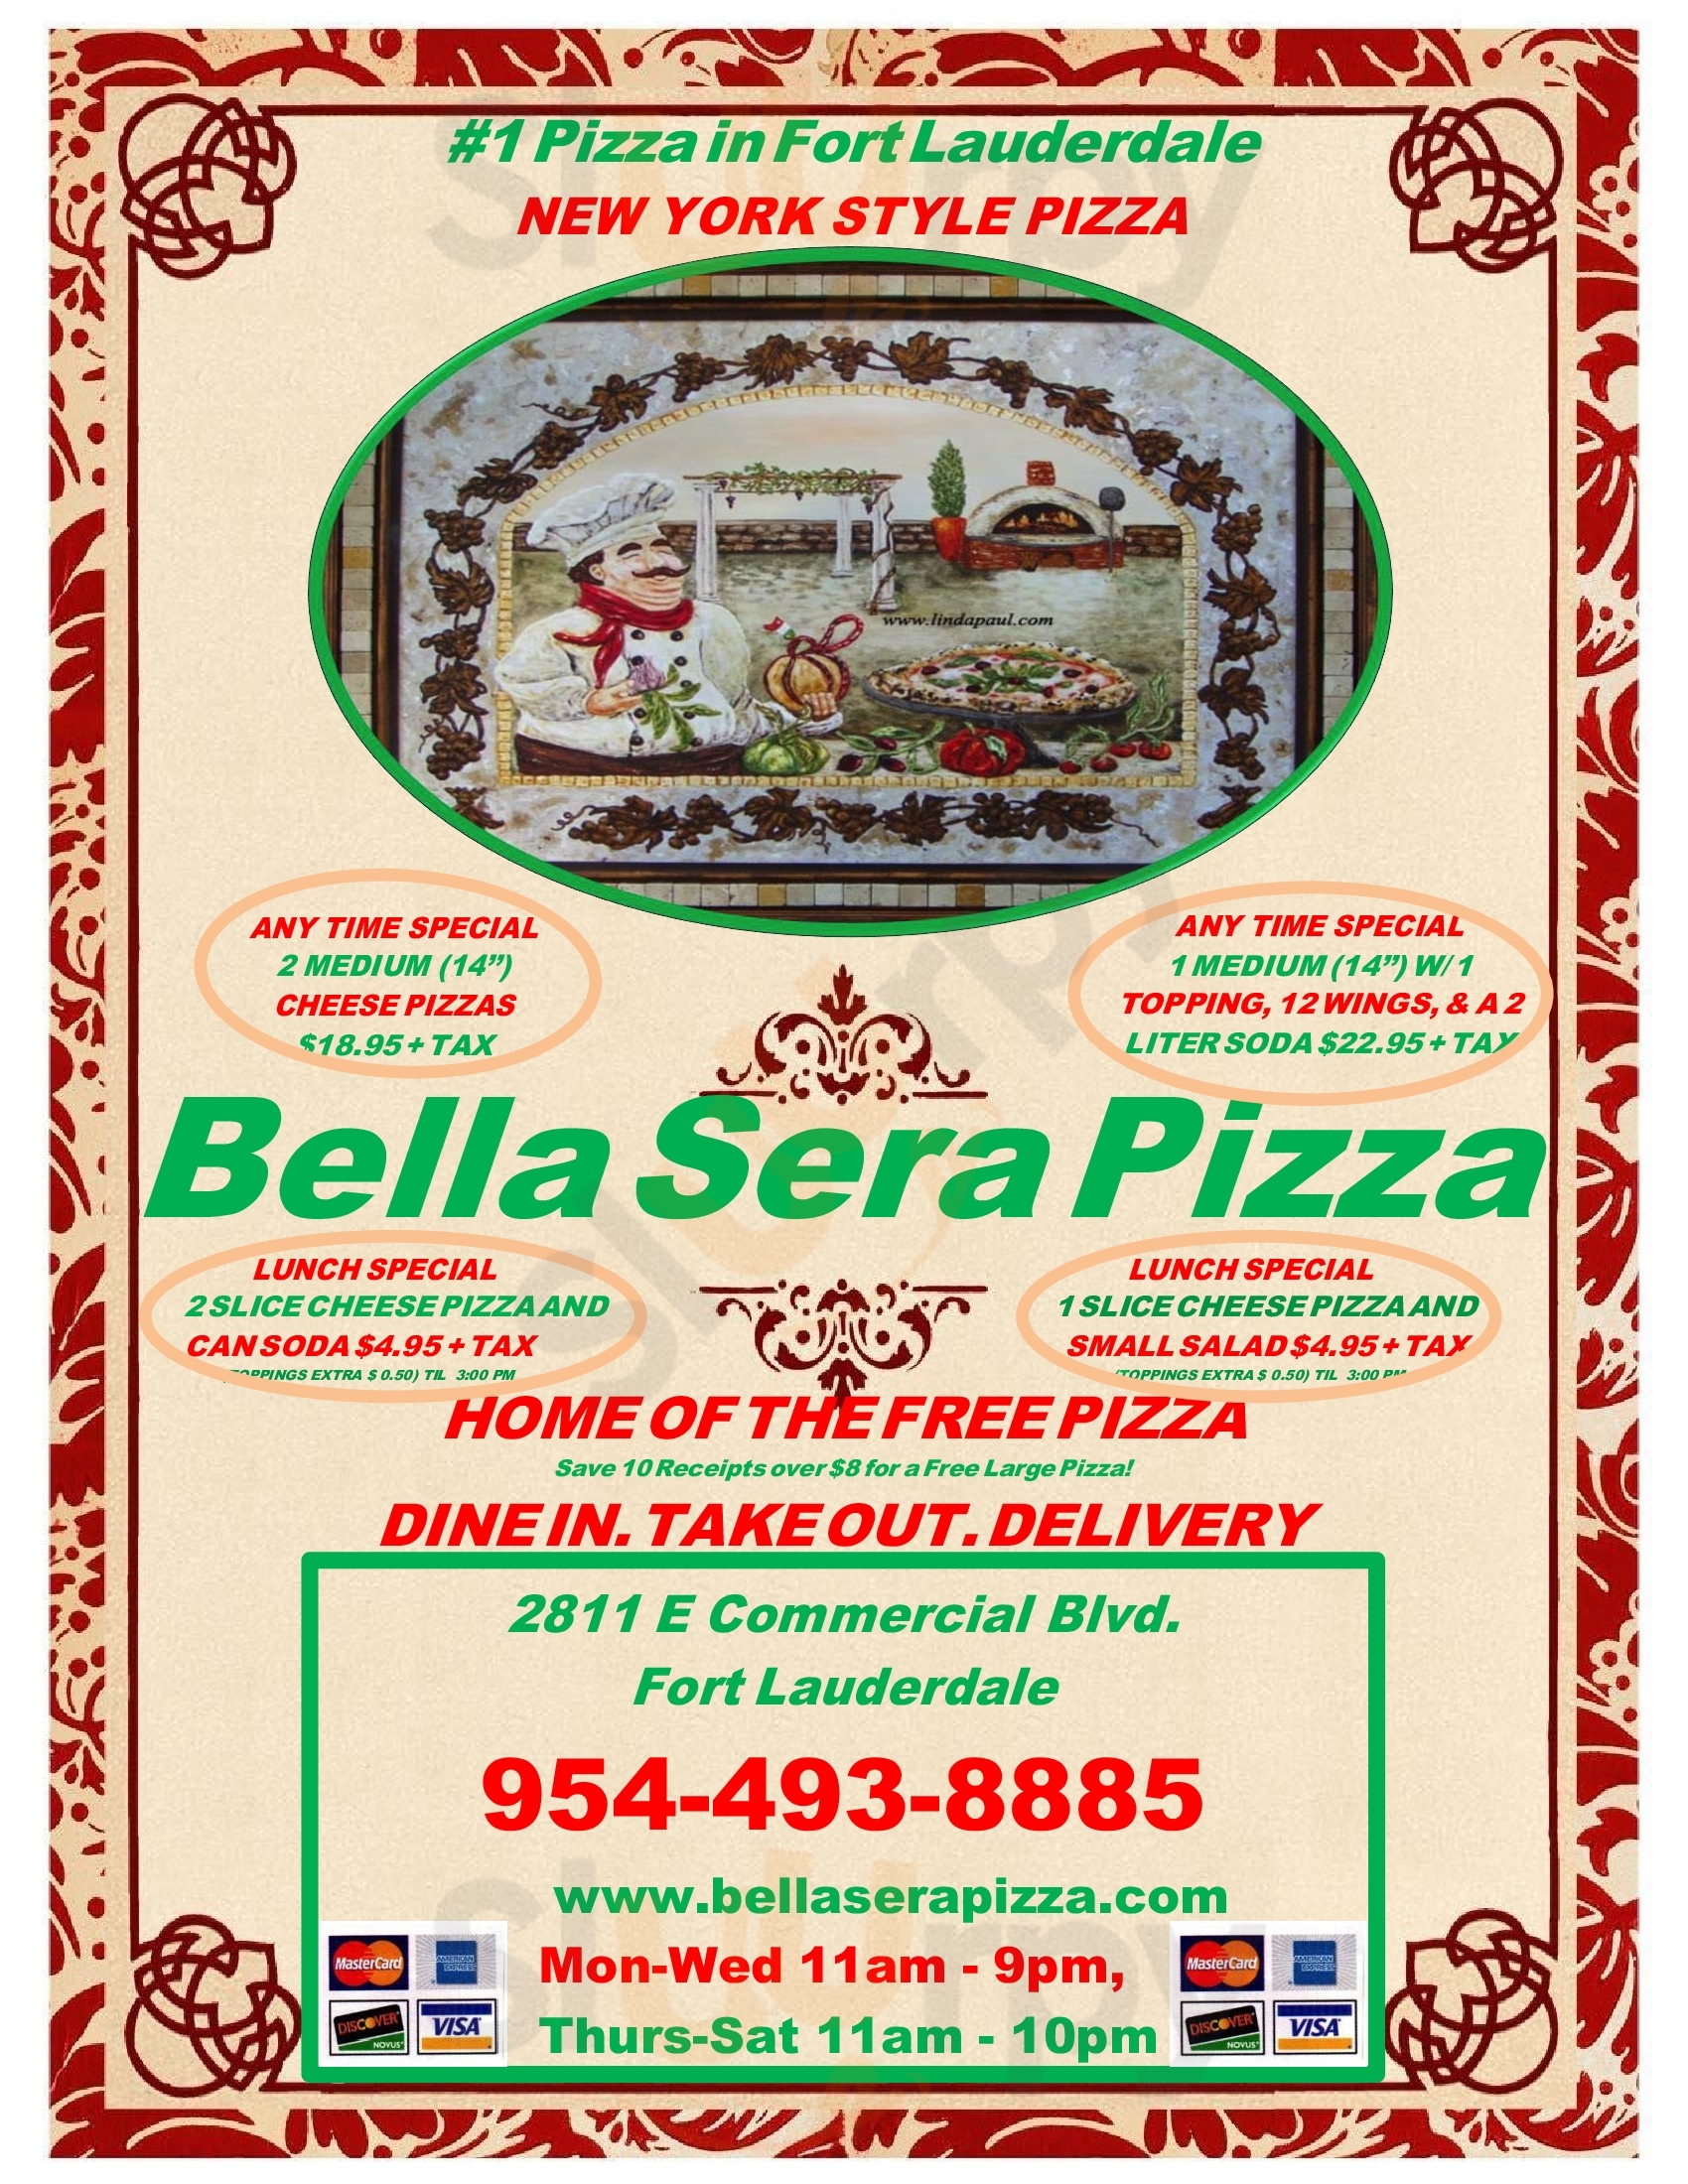 Bella Sera Pizza Fort Lauderdale Menu - 1